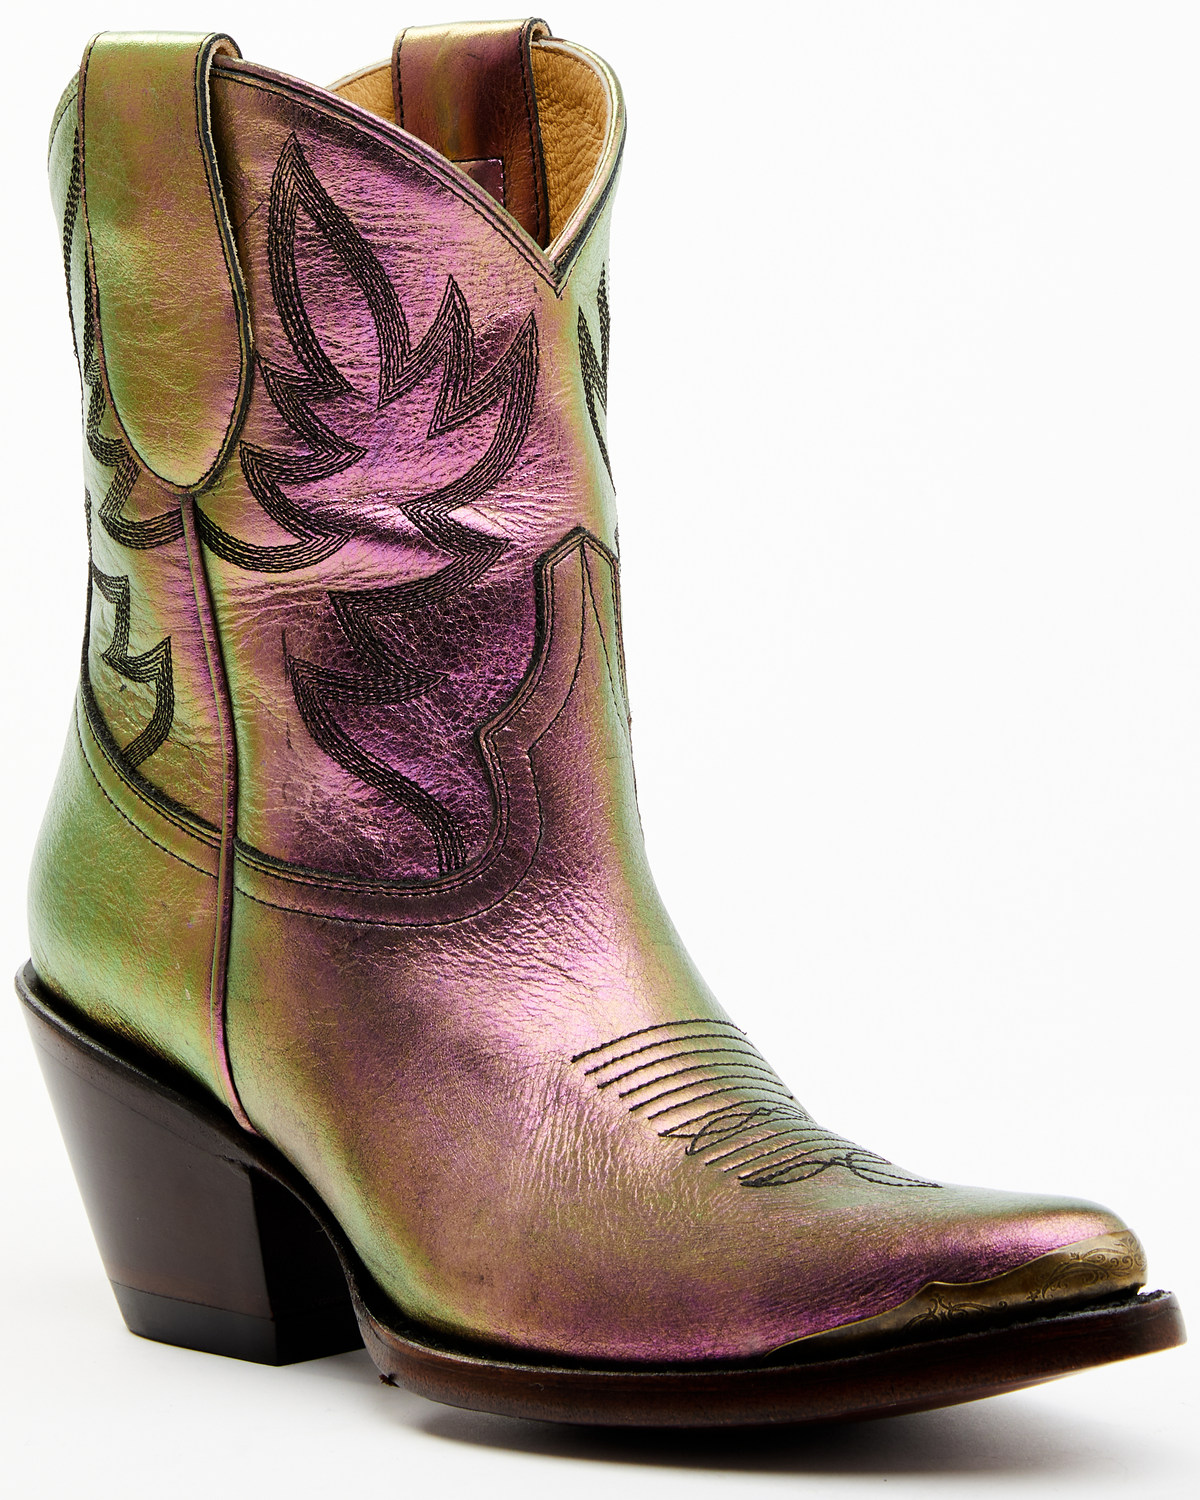 Idyllwind Women's Dazzled Iridescent Metallic Leather Booties - Pointed Toe